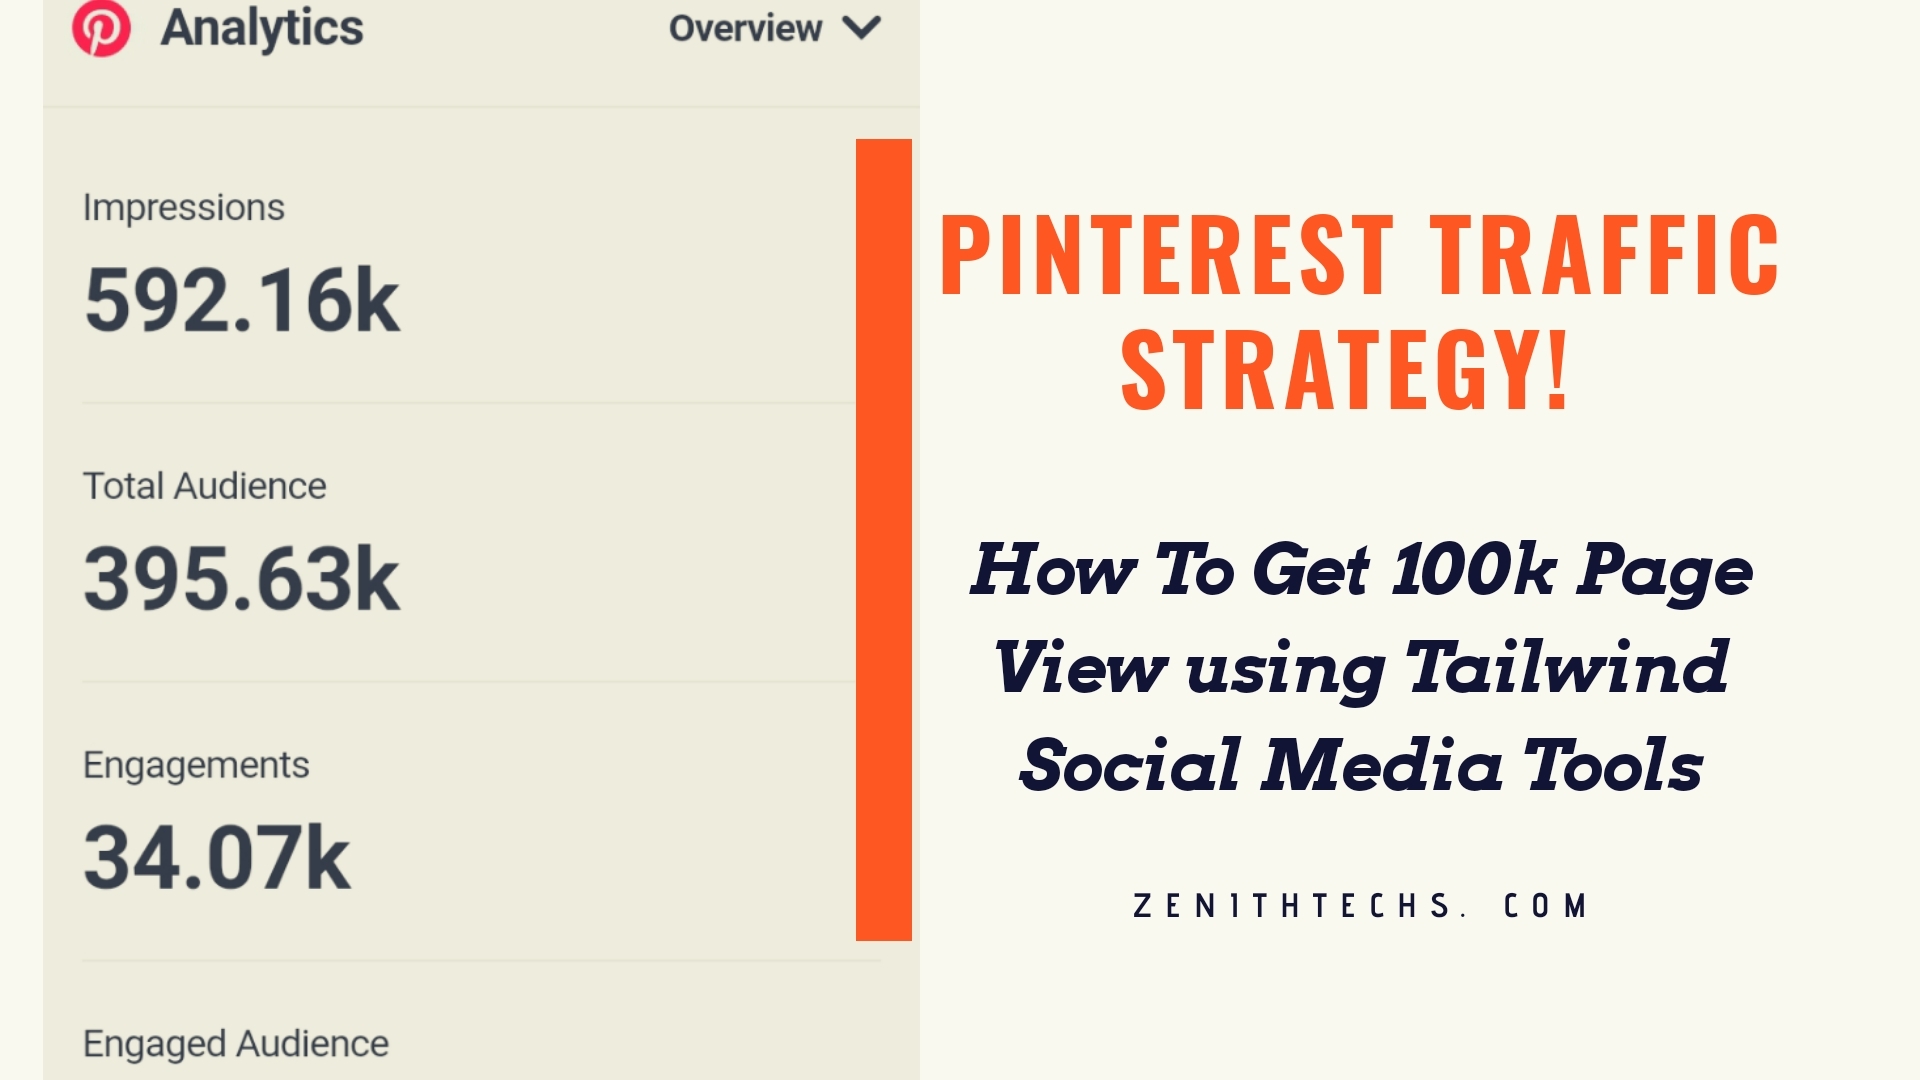 Pinterest Traffic Strategy using Tailwind Tool